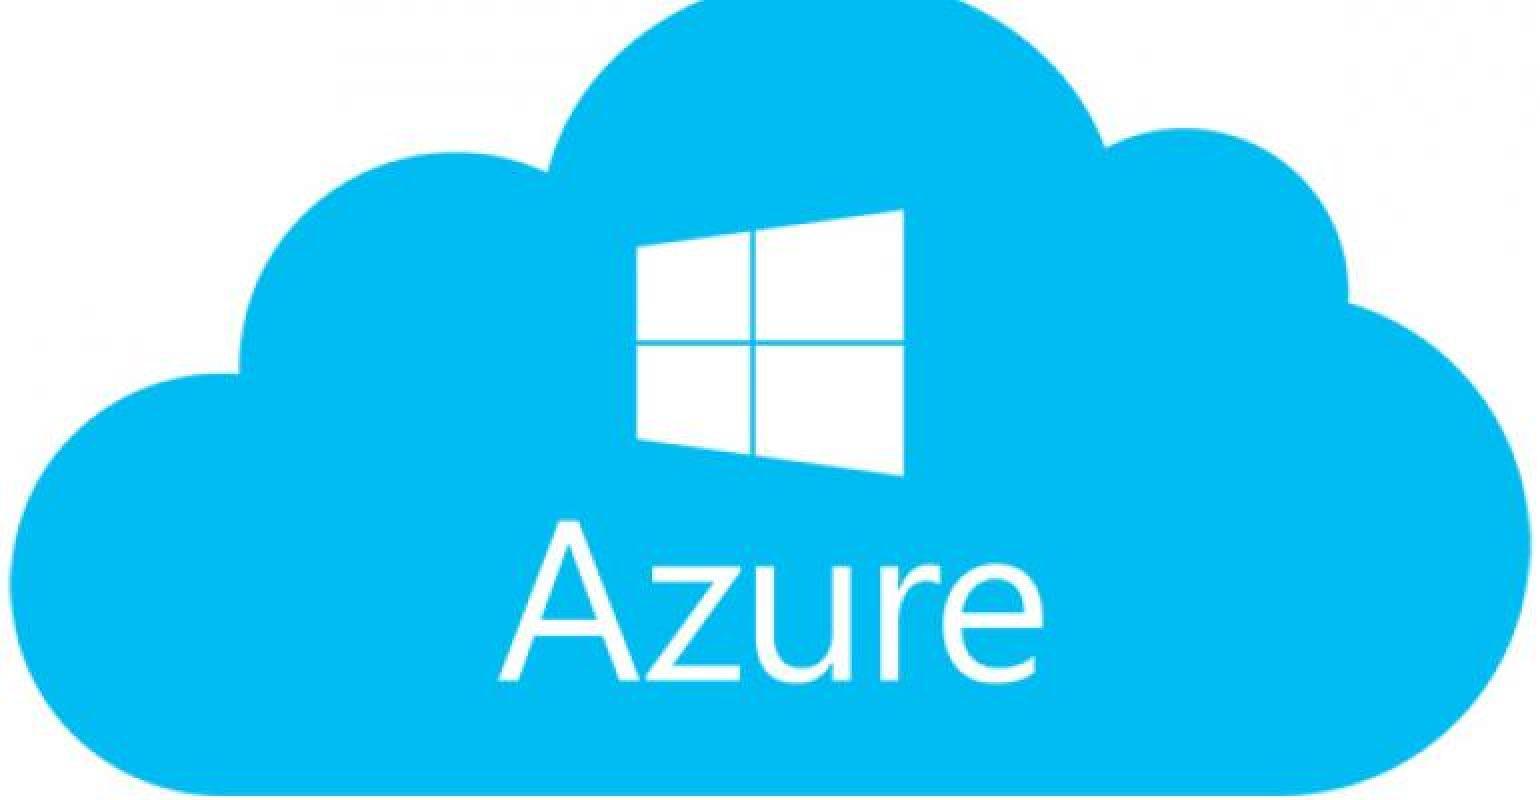 Microsoft Azure training for Beginners in Greensboro | Microsoft Azure Fundamentals | Azure cloud computing training | Microsoft Azure Fundamentals AZ-900 Certification Exam Prep (Preparation) Training Course